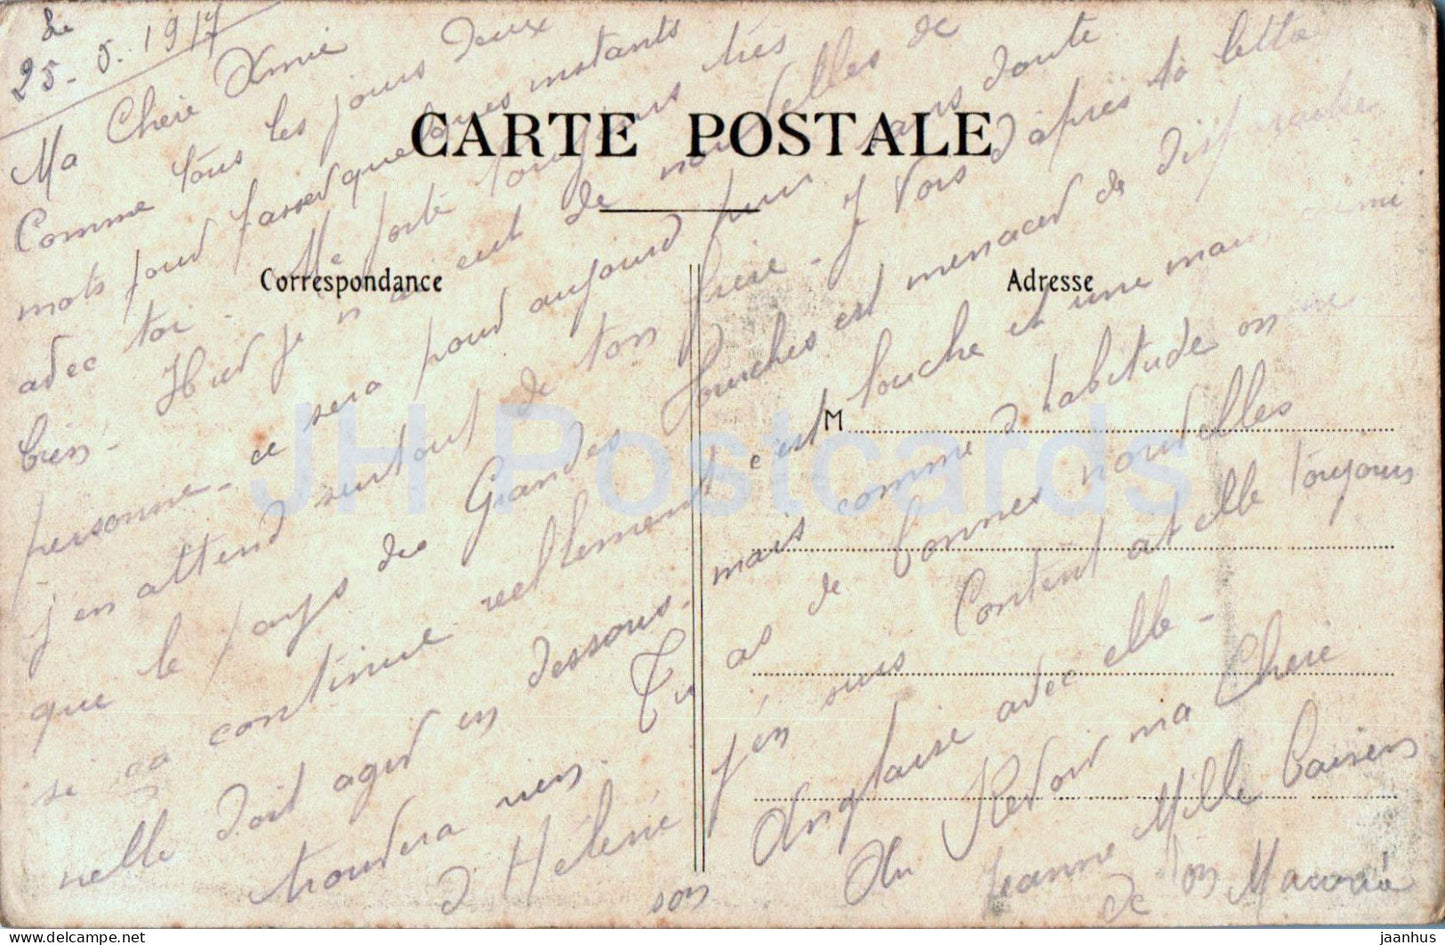 Mareuil sur Ay - La Bouteille - La Champagne - alte Postkarte - 1917 - Frankreich - gebraucht 